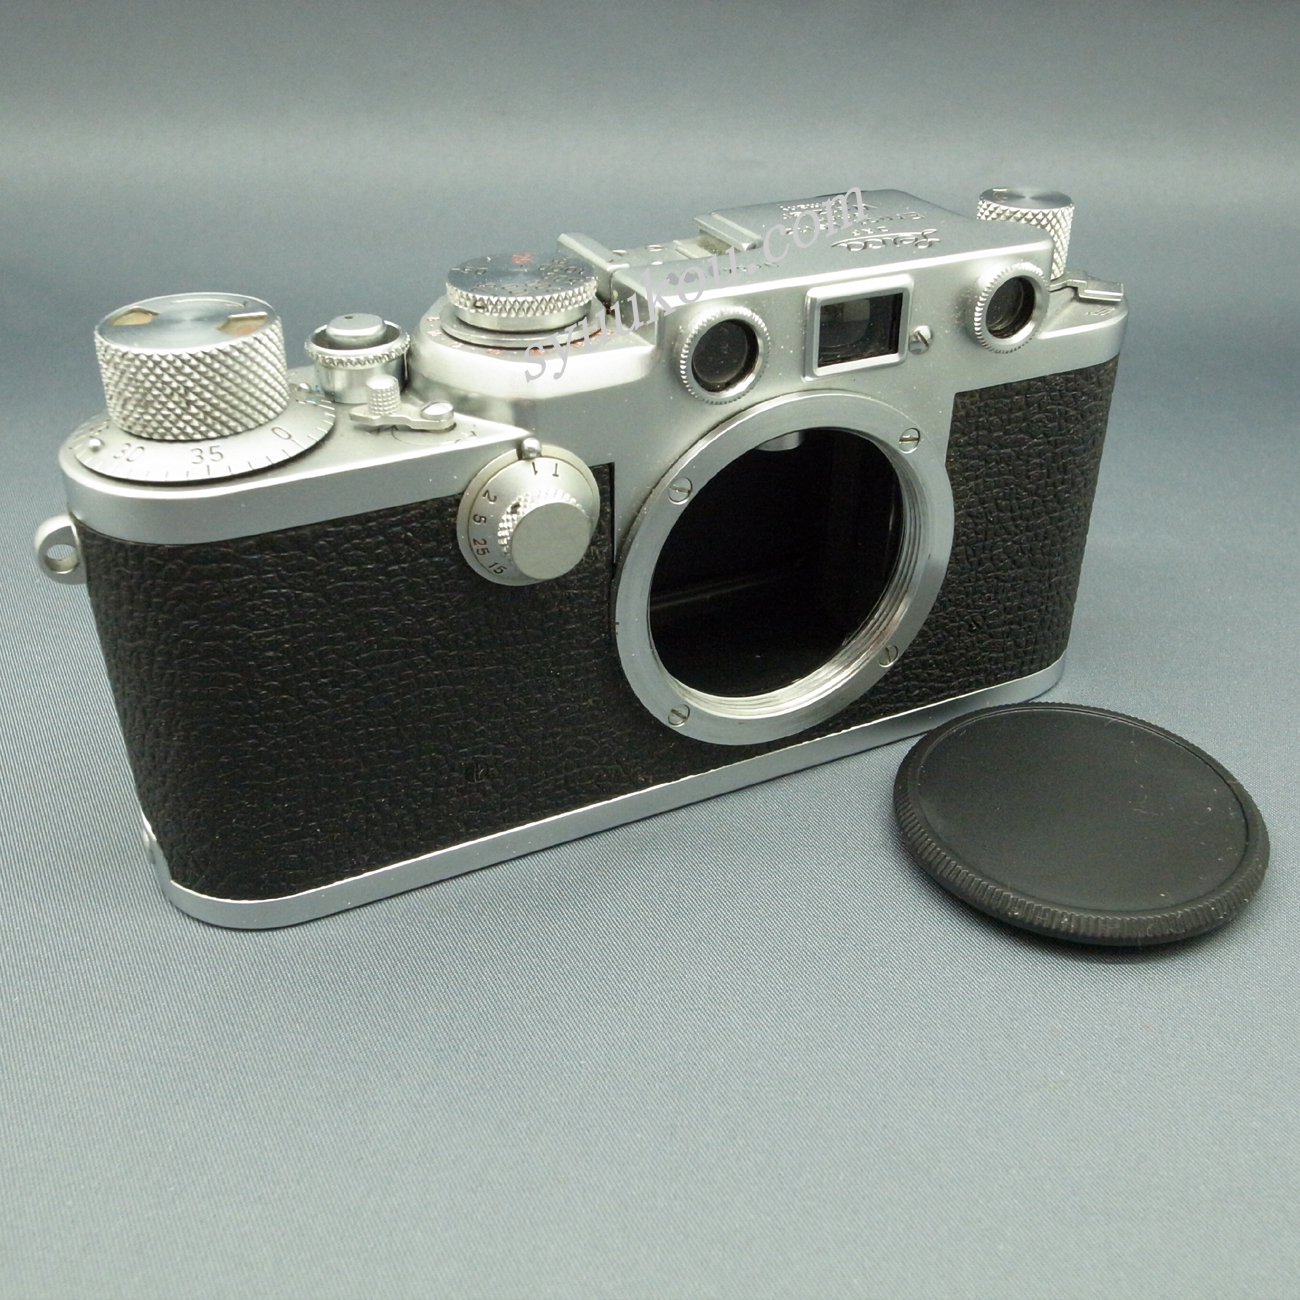 Leica ライカ IIIf RD セルフタイマー無し - カメラ